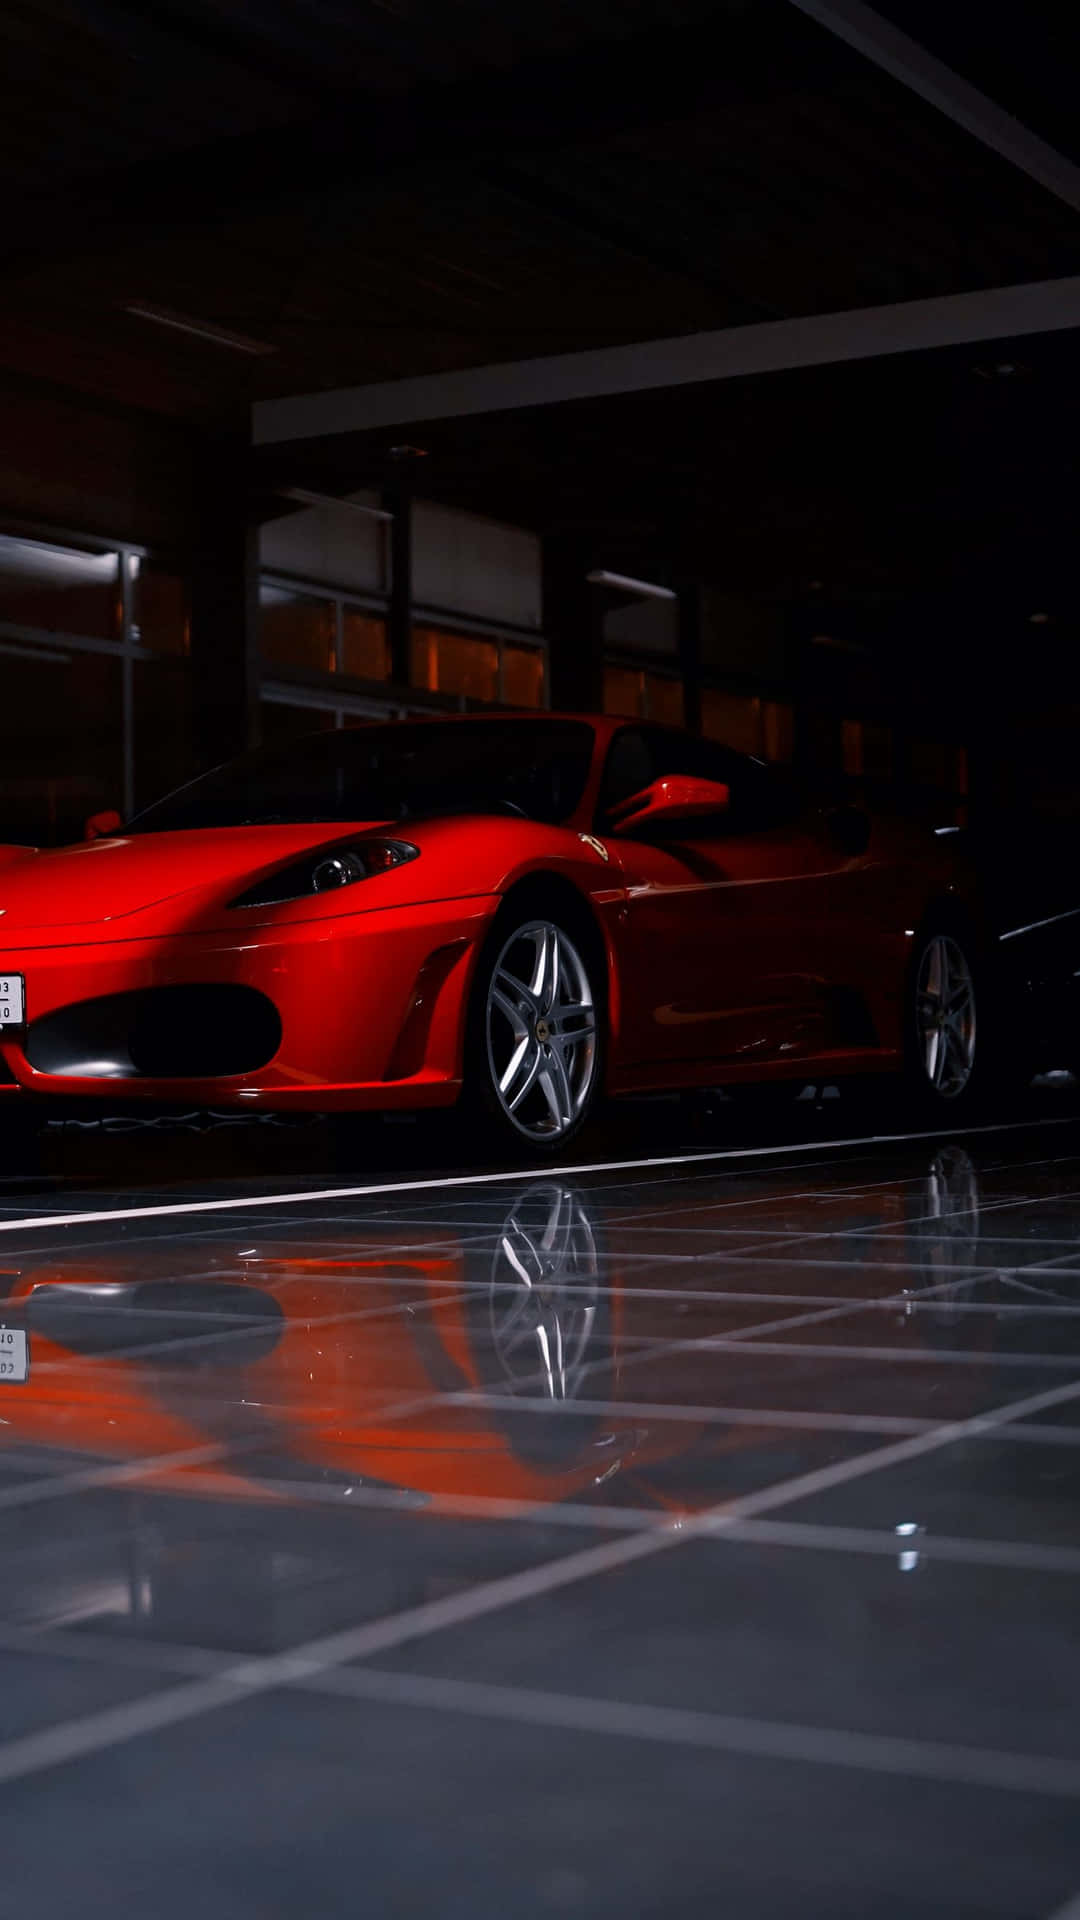 A stunning red Ferrari F430 showcasing its sleek design and powerful presence Wallpaper